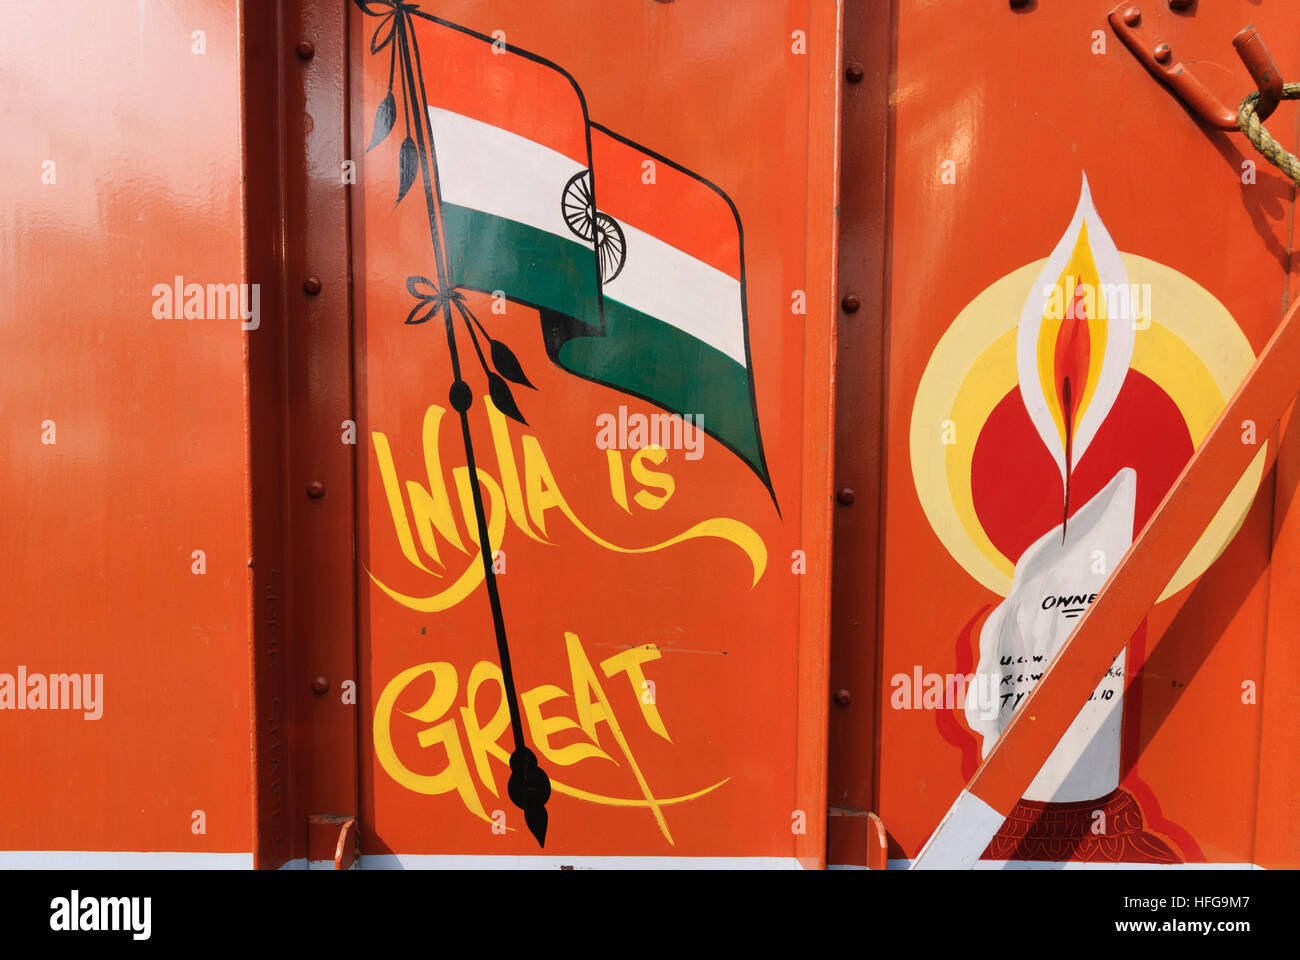 Kaziranga: Truck side wall, painted, flag India, Assam, India Stock Photo